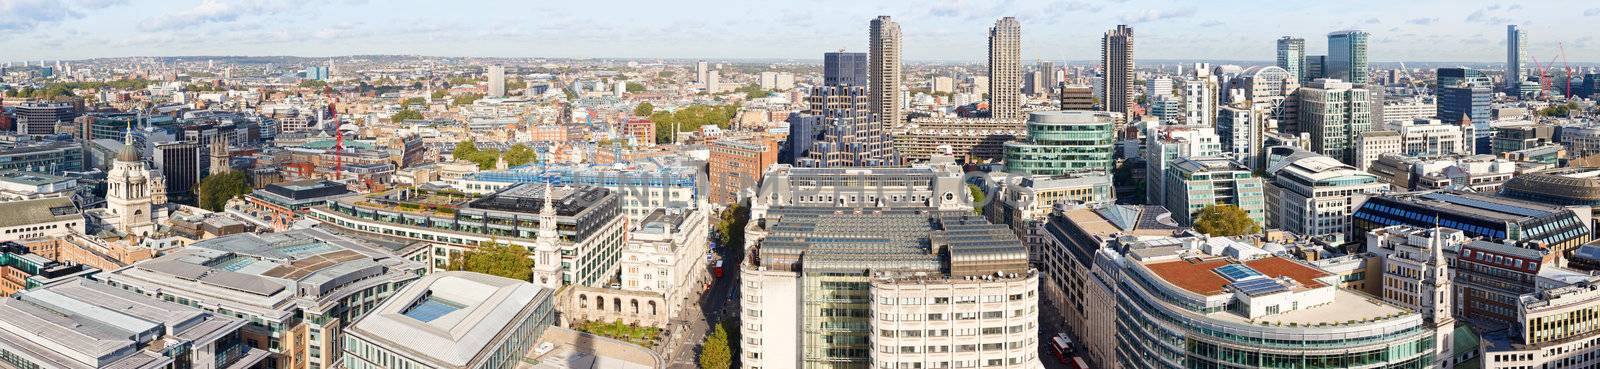 London panorama by naumoid